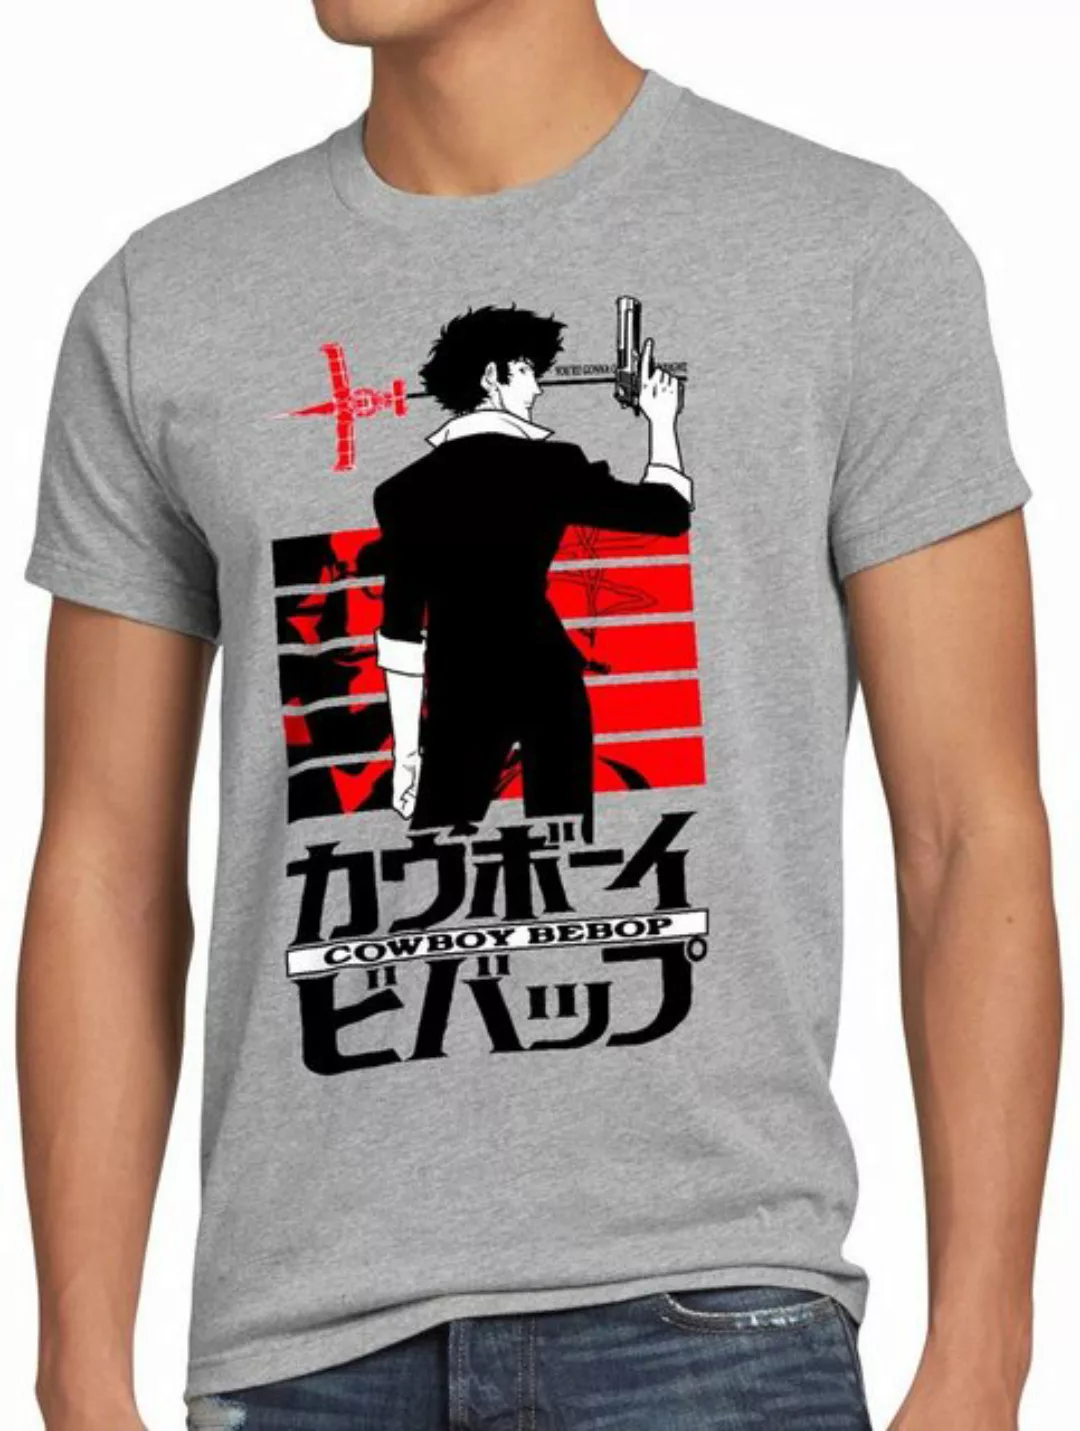 style3 Print-Shirt Herren T-Shirt The Cowboy swordfish anime manga günstig online kaufen